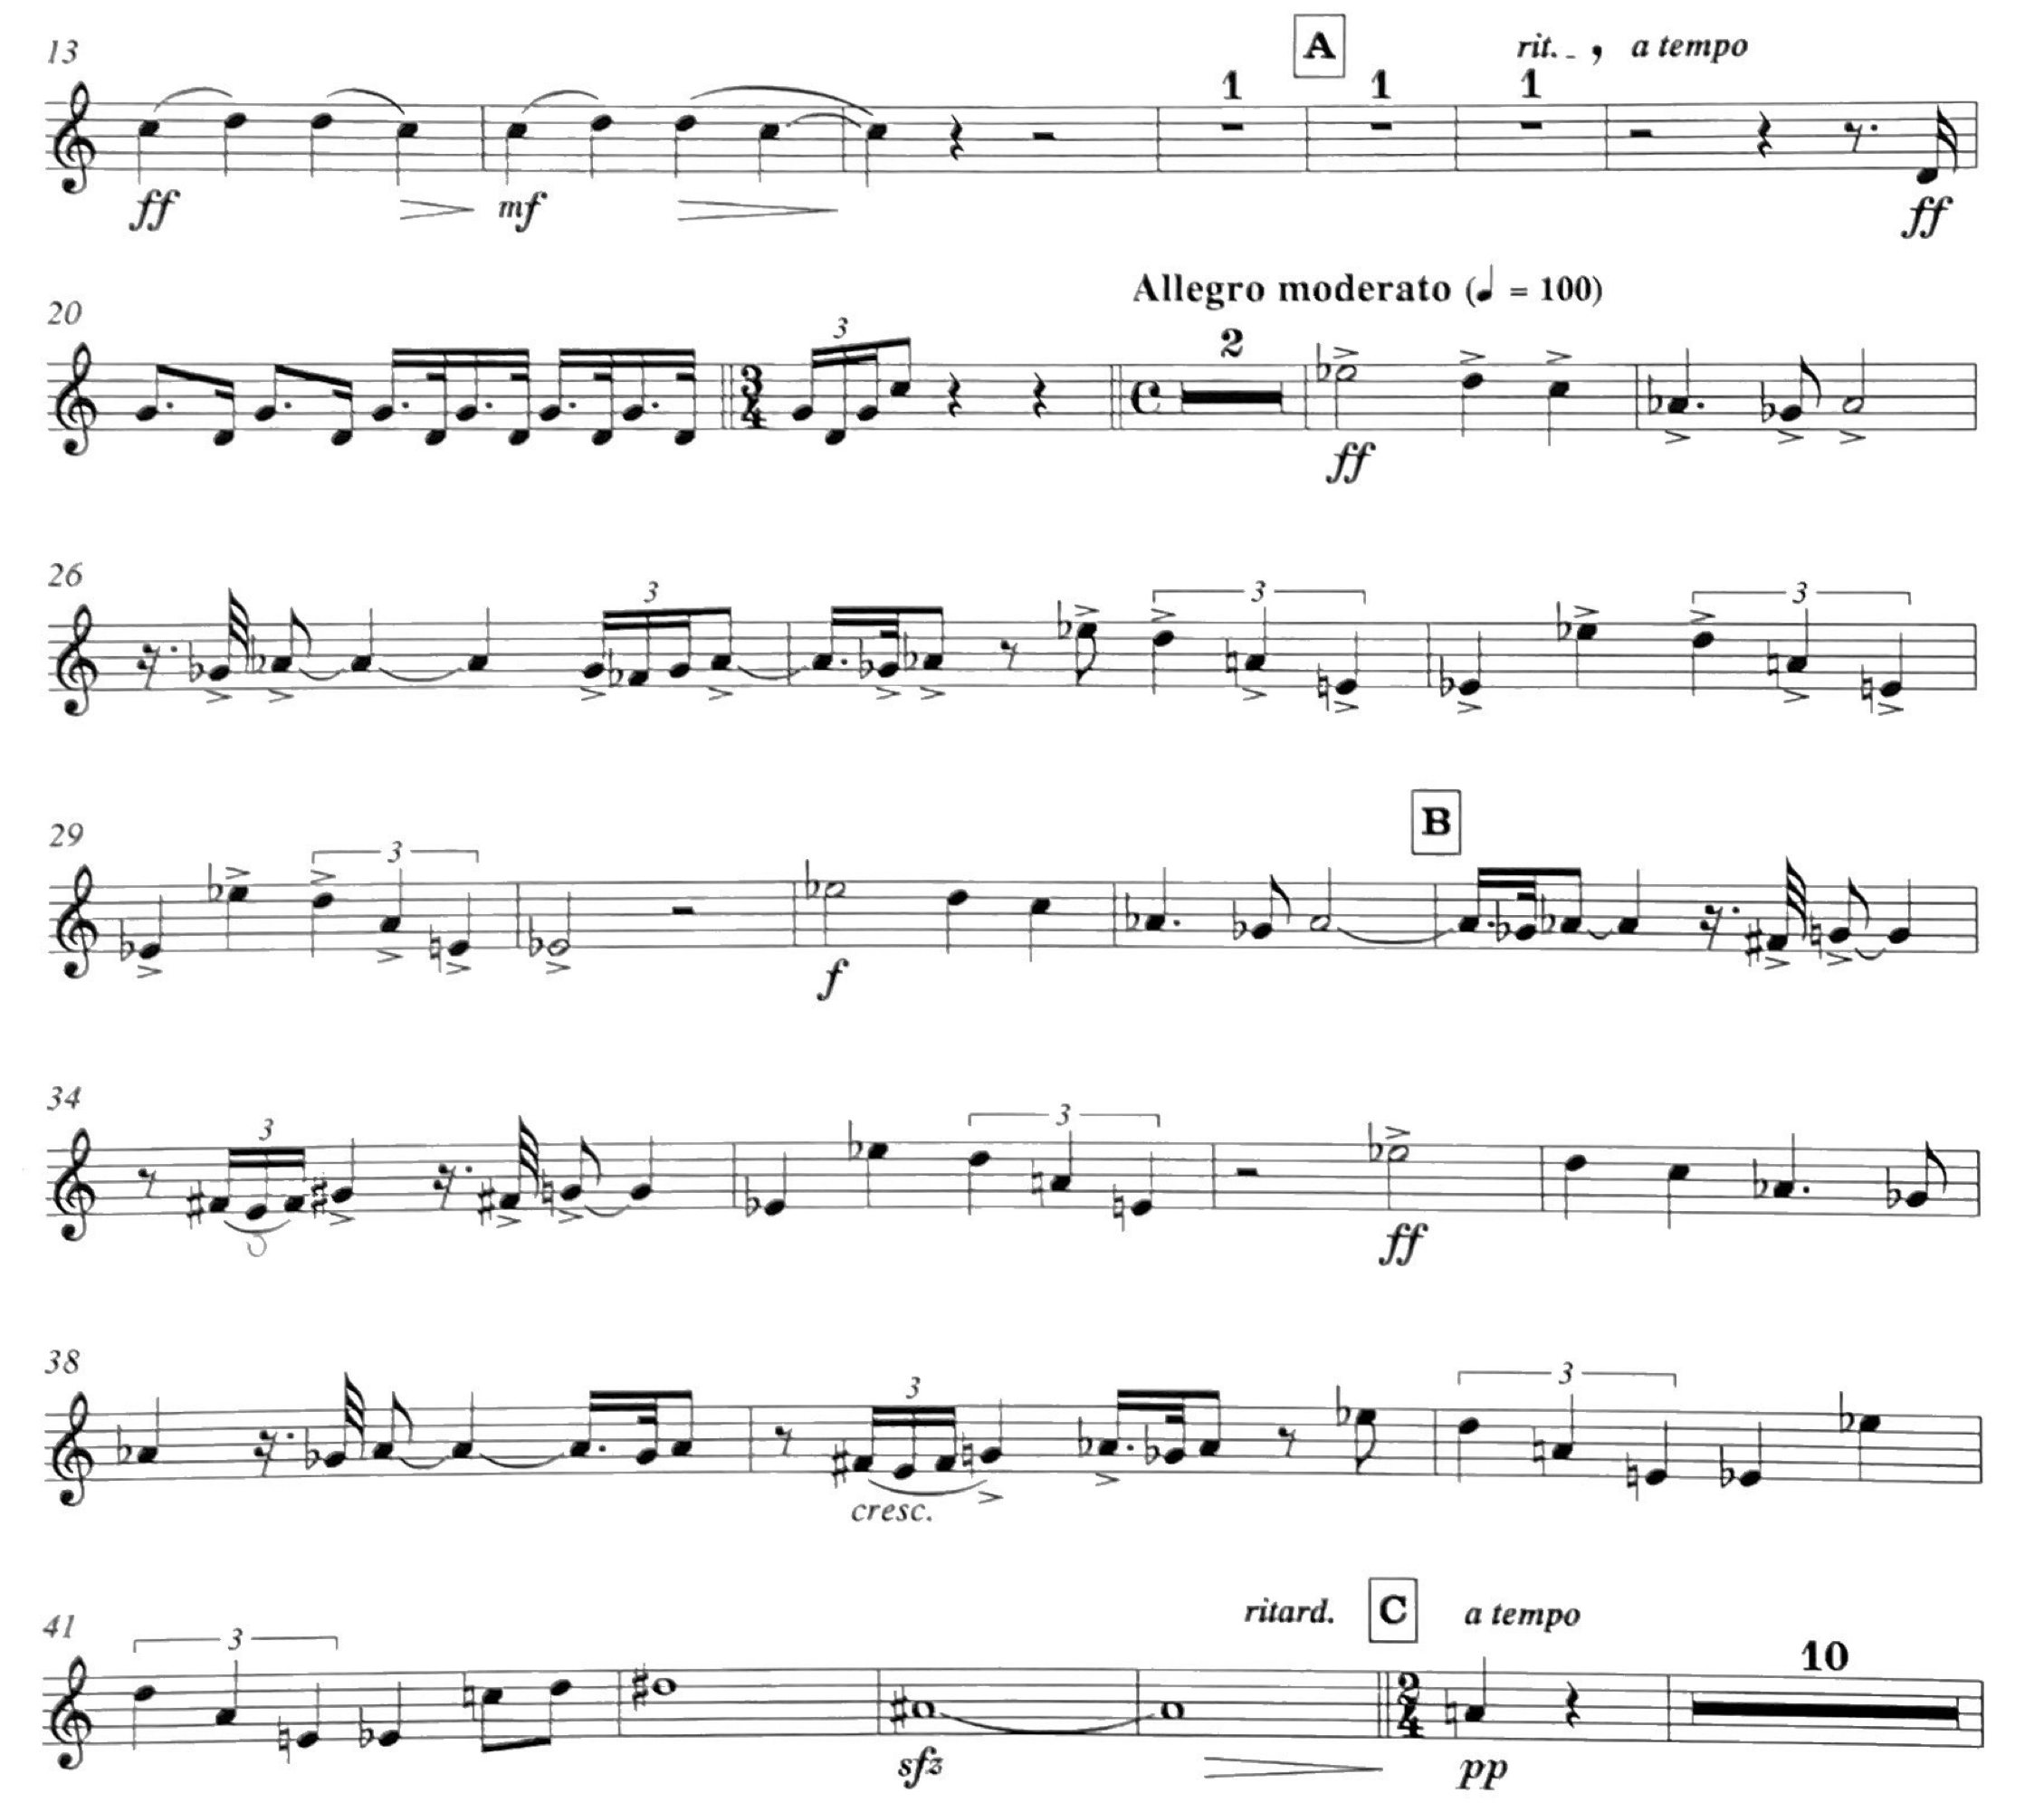 From Hanson, Symphony No. 2 (Romantic), I, Horn 2 in F